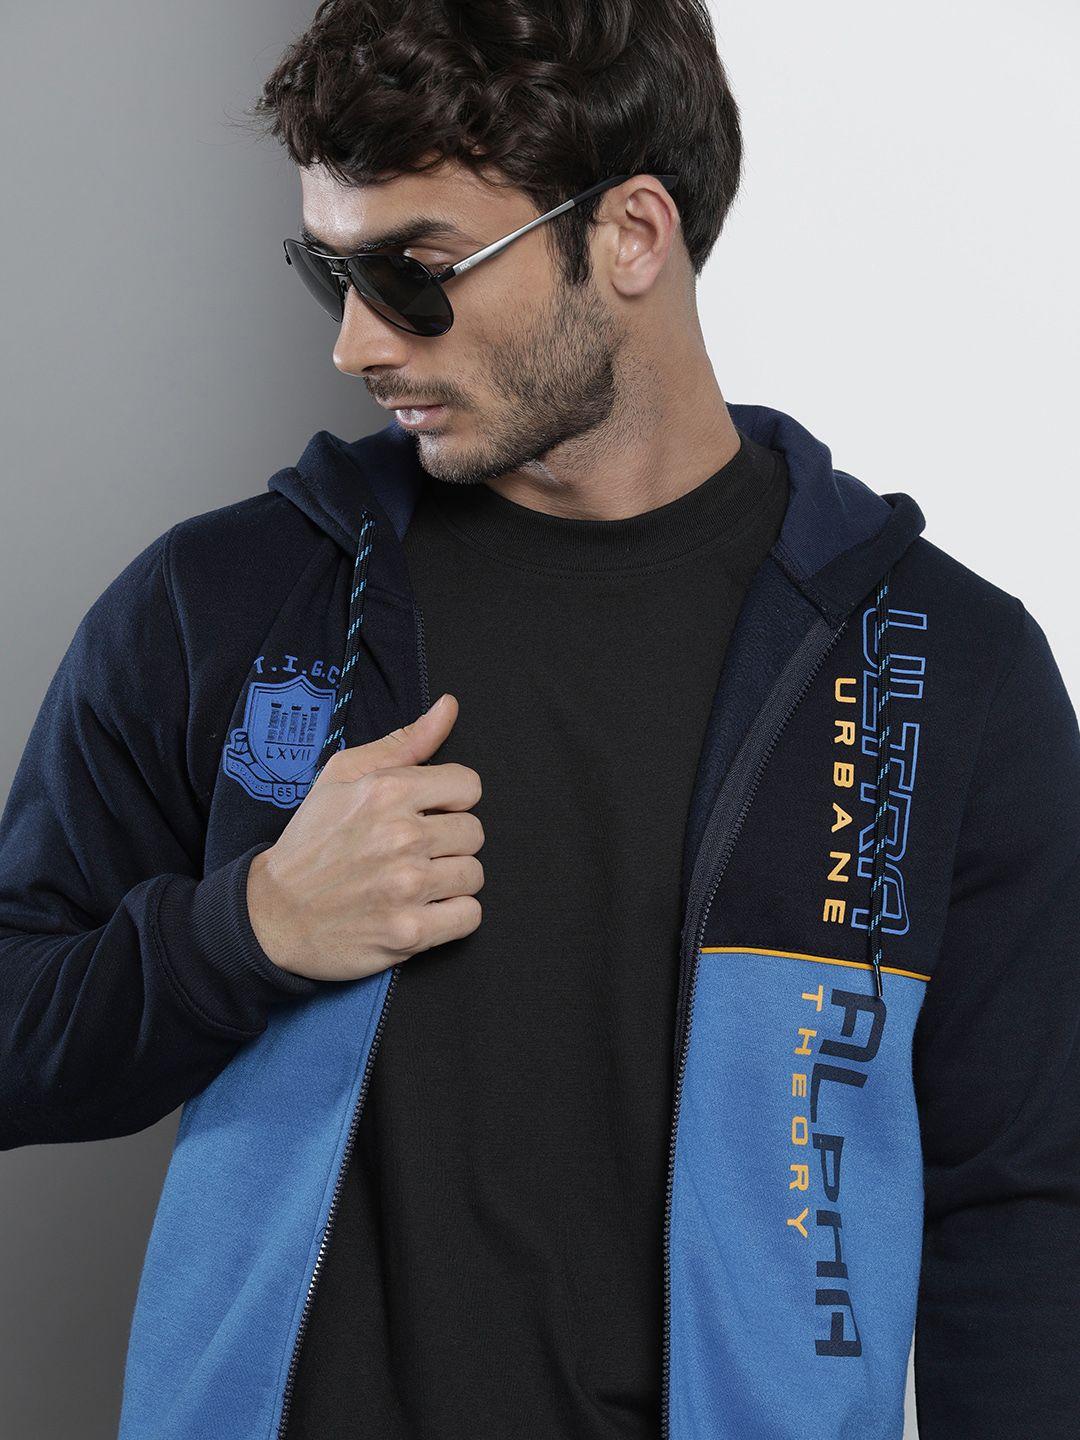 the-indian-garage-co-men-navy-blue-colourblocked-hooded-sweatshirt